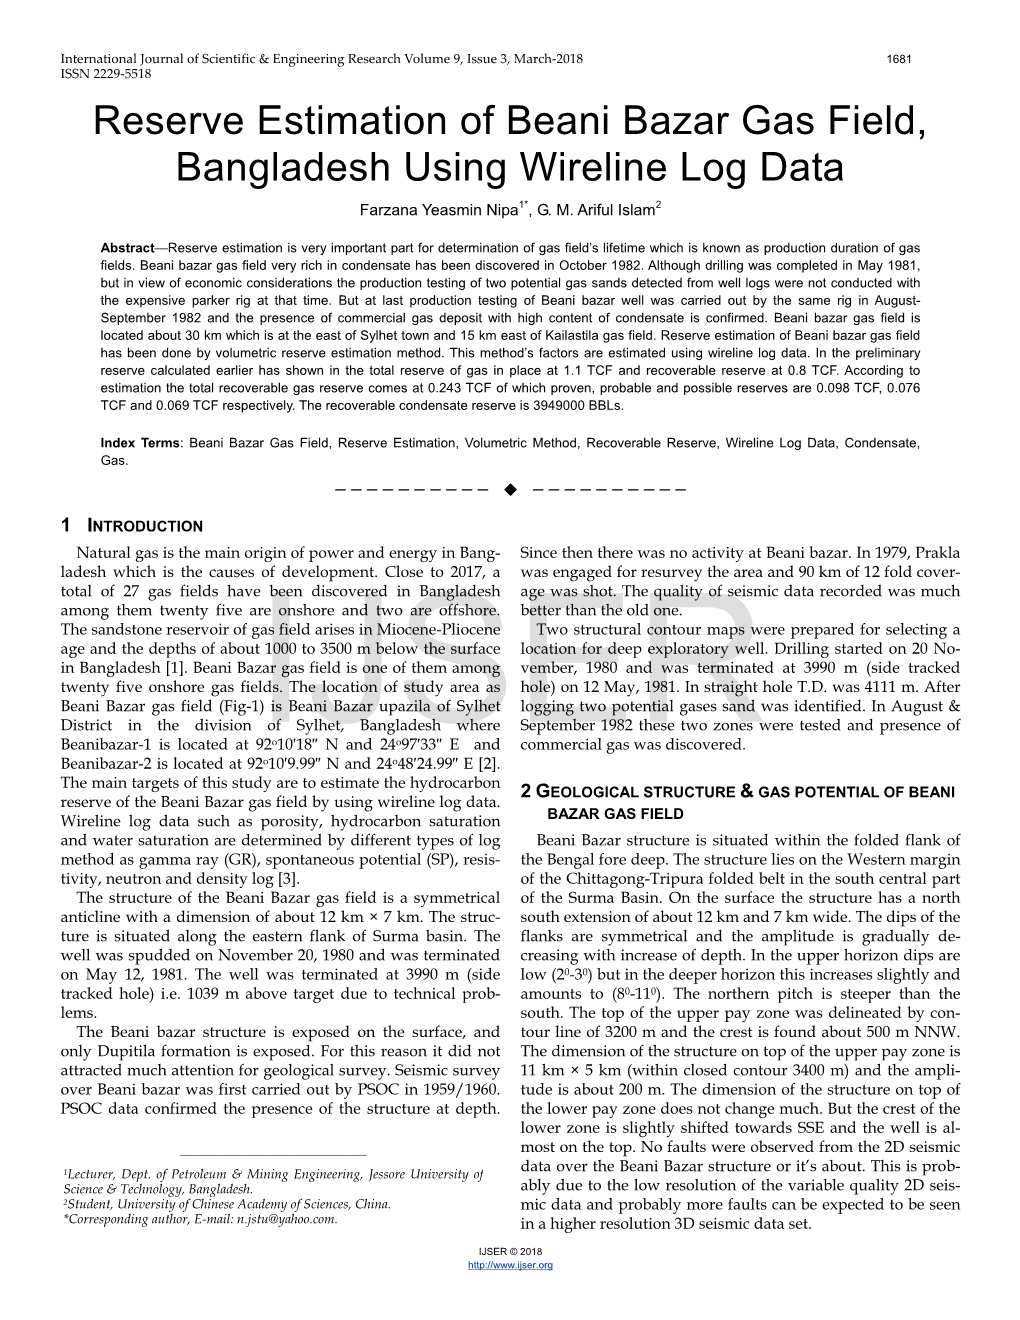 Reserve Estimation of Beani Bazar Gas Field, Bangladesh Using Wireline Log Data Farzana Yeasmin Nipa1*, G